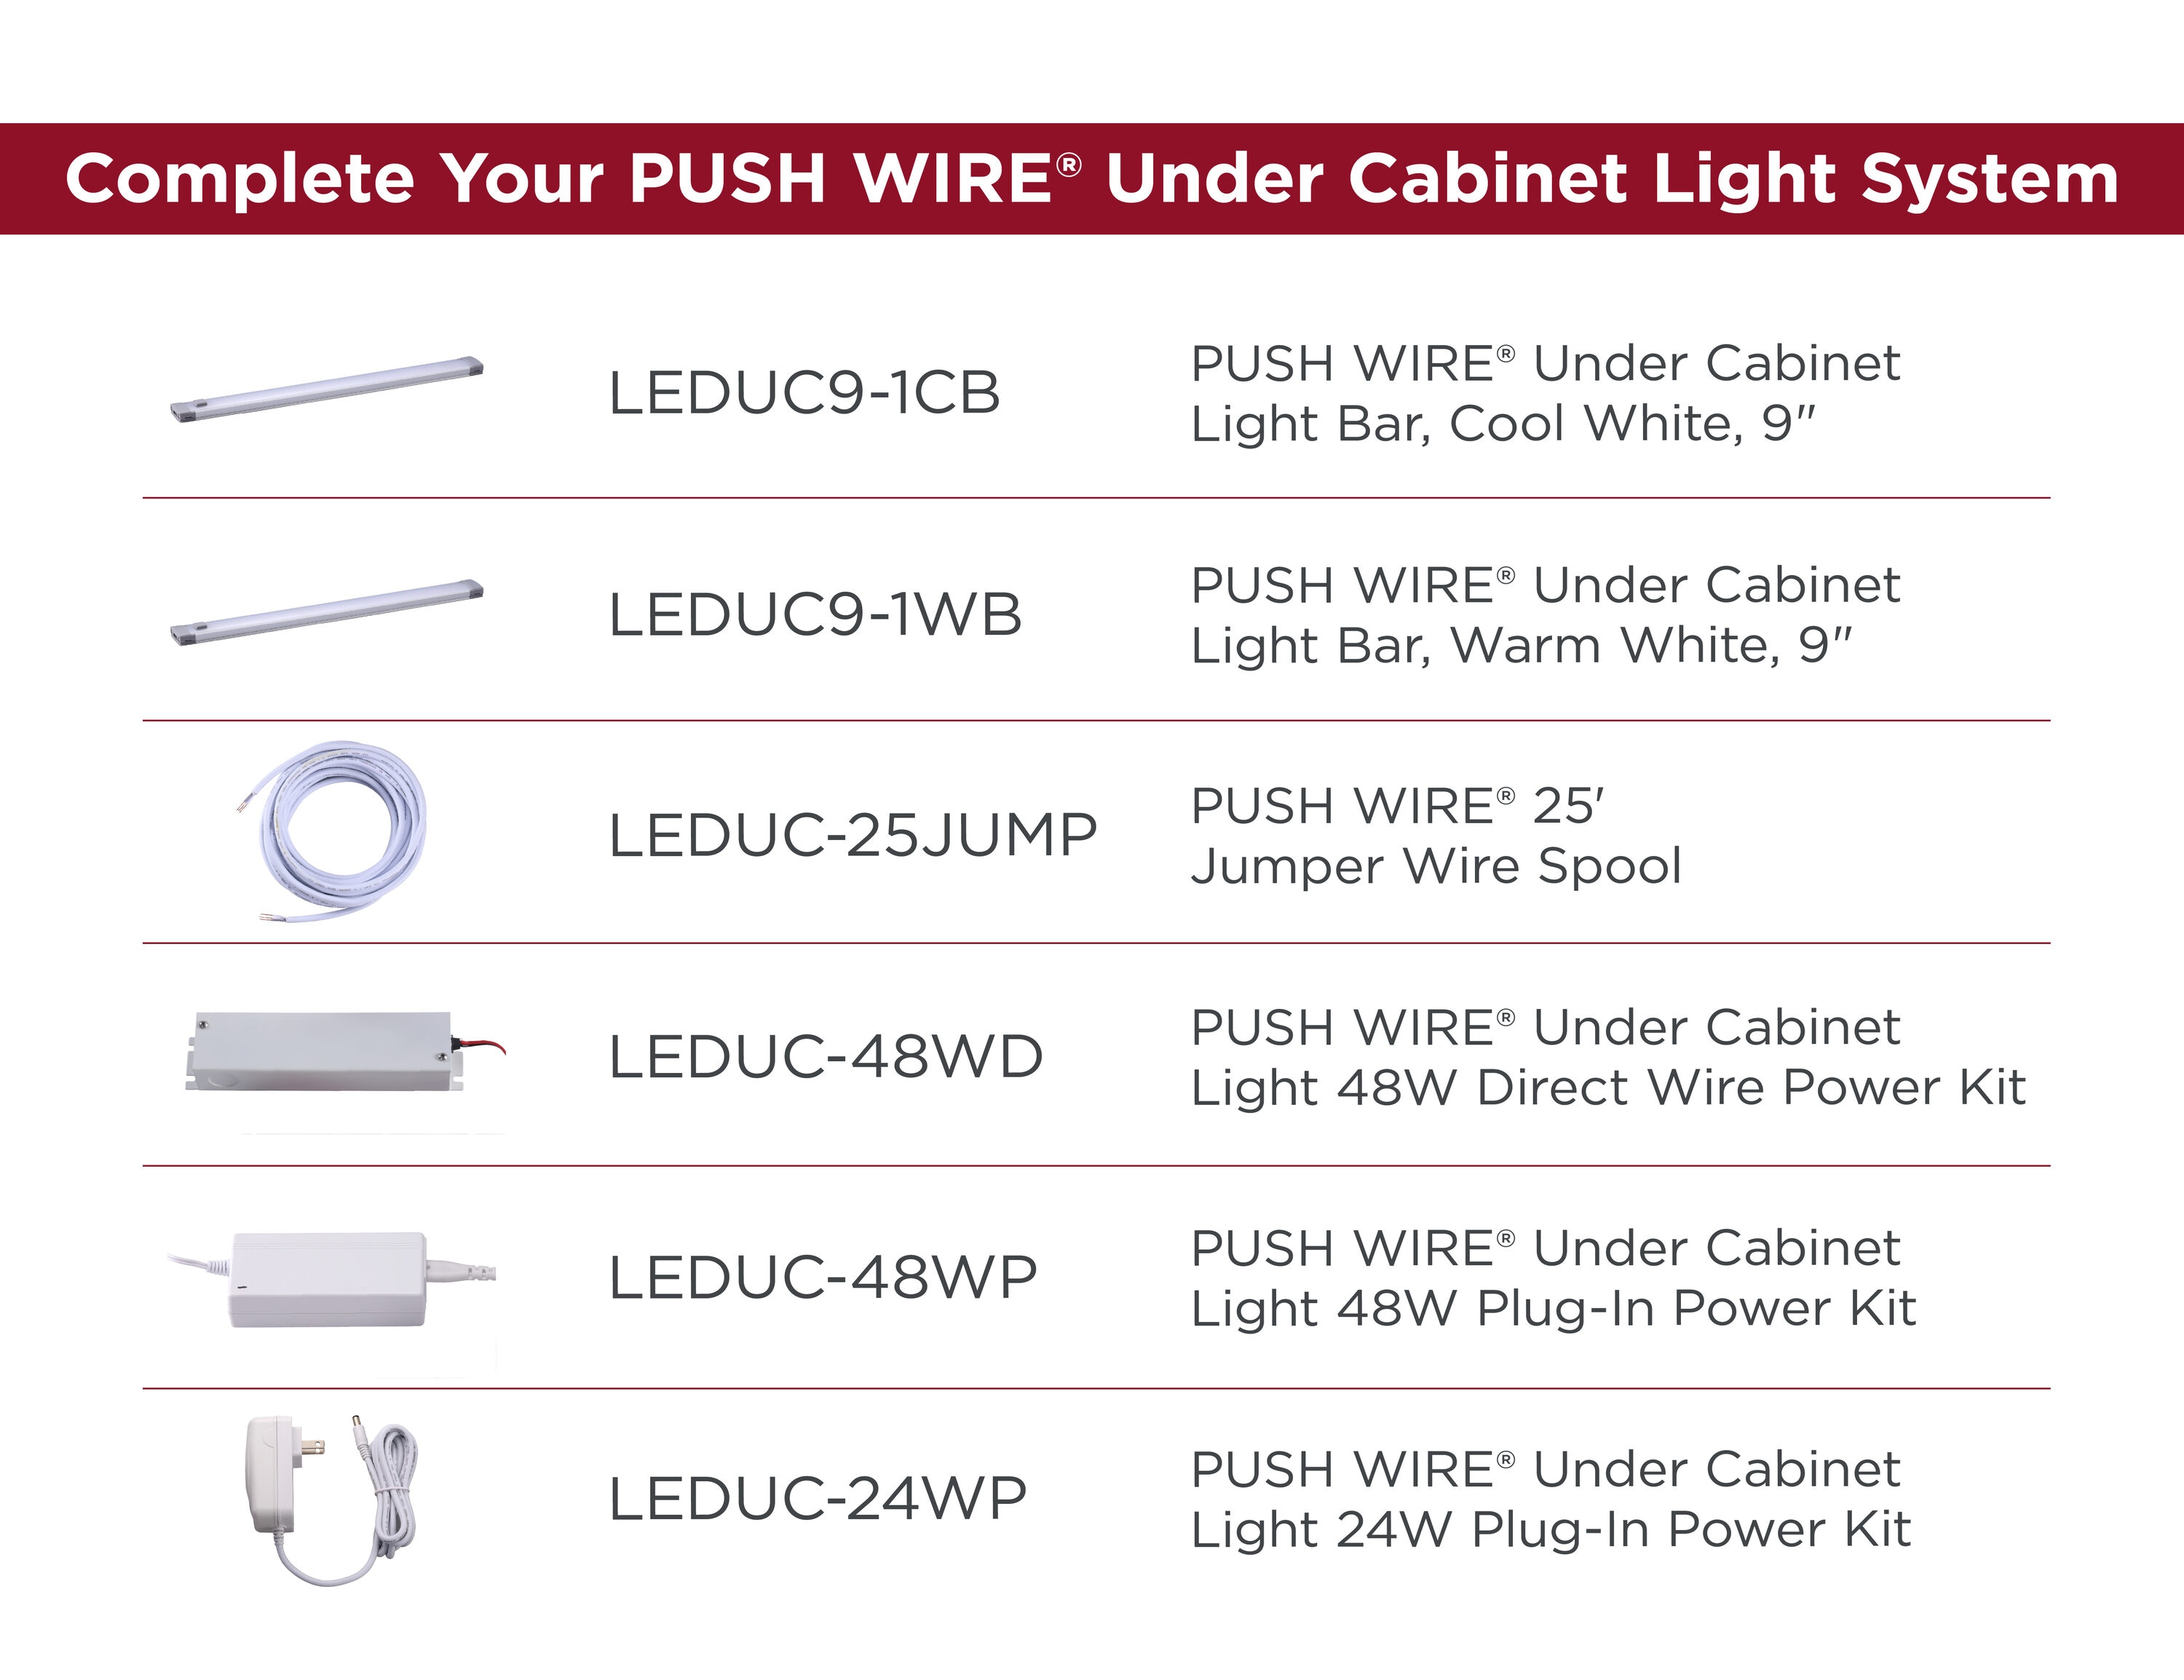 Black & Decker PUSH WIRE Under Cabinet Light Bar, Cool White, 9 LEDUC9-1CB